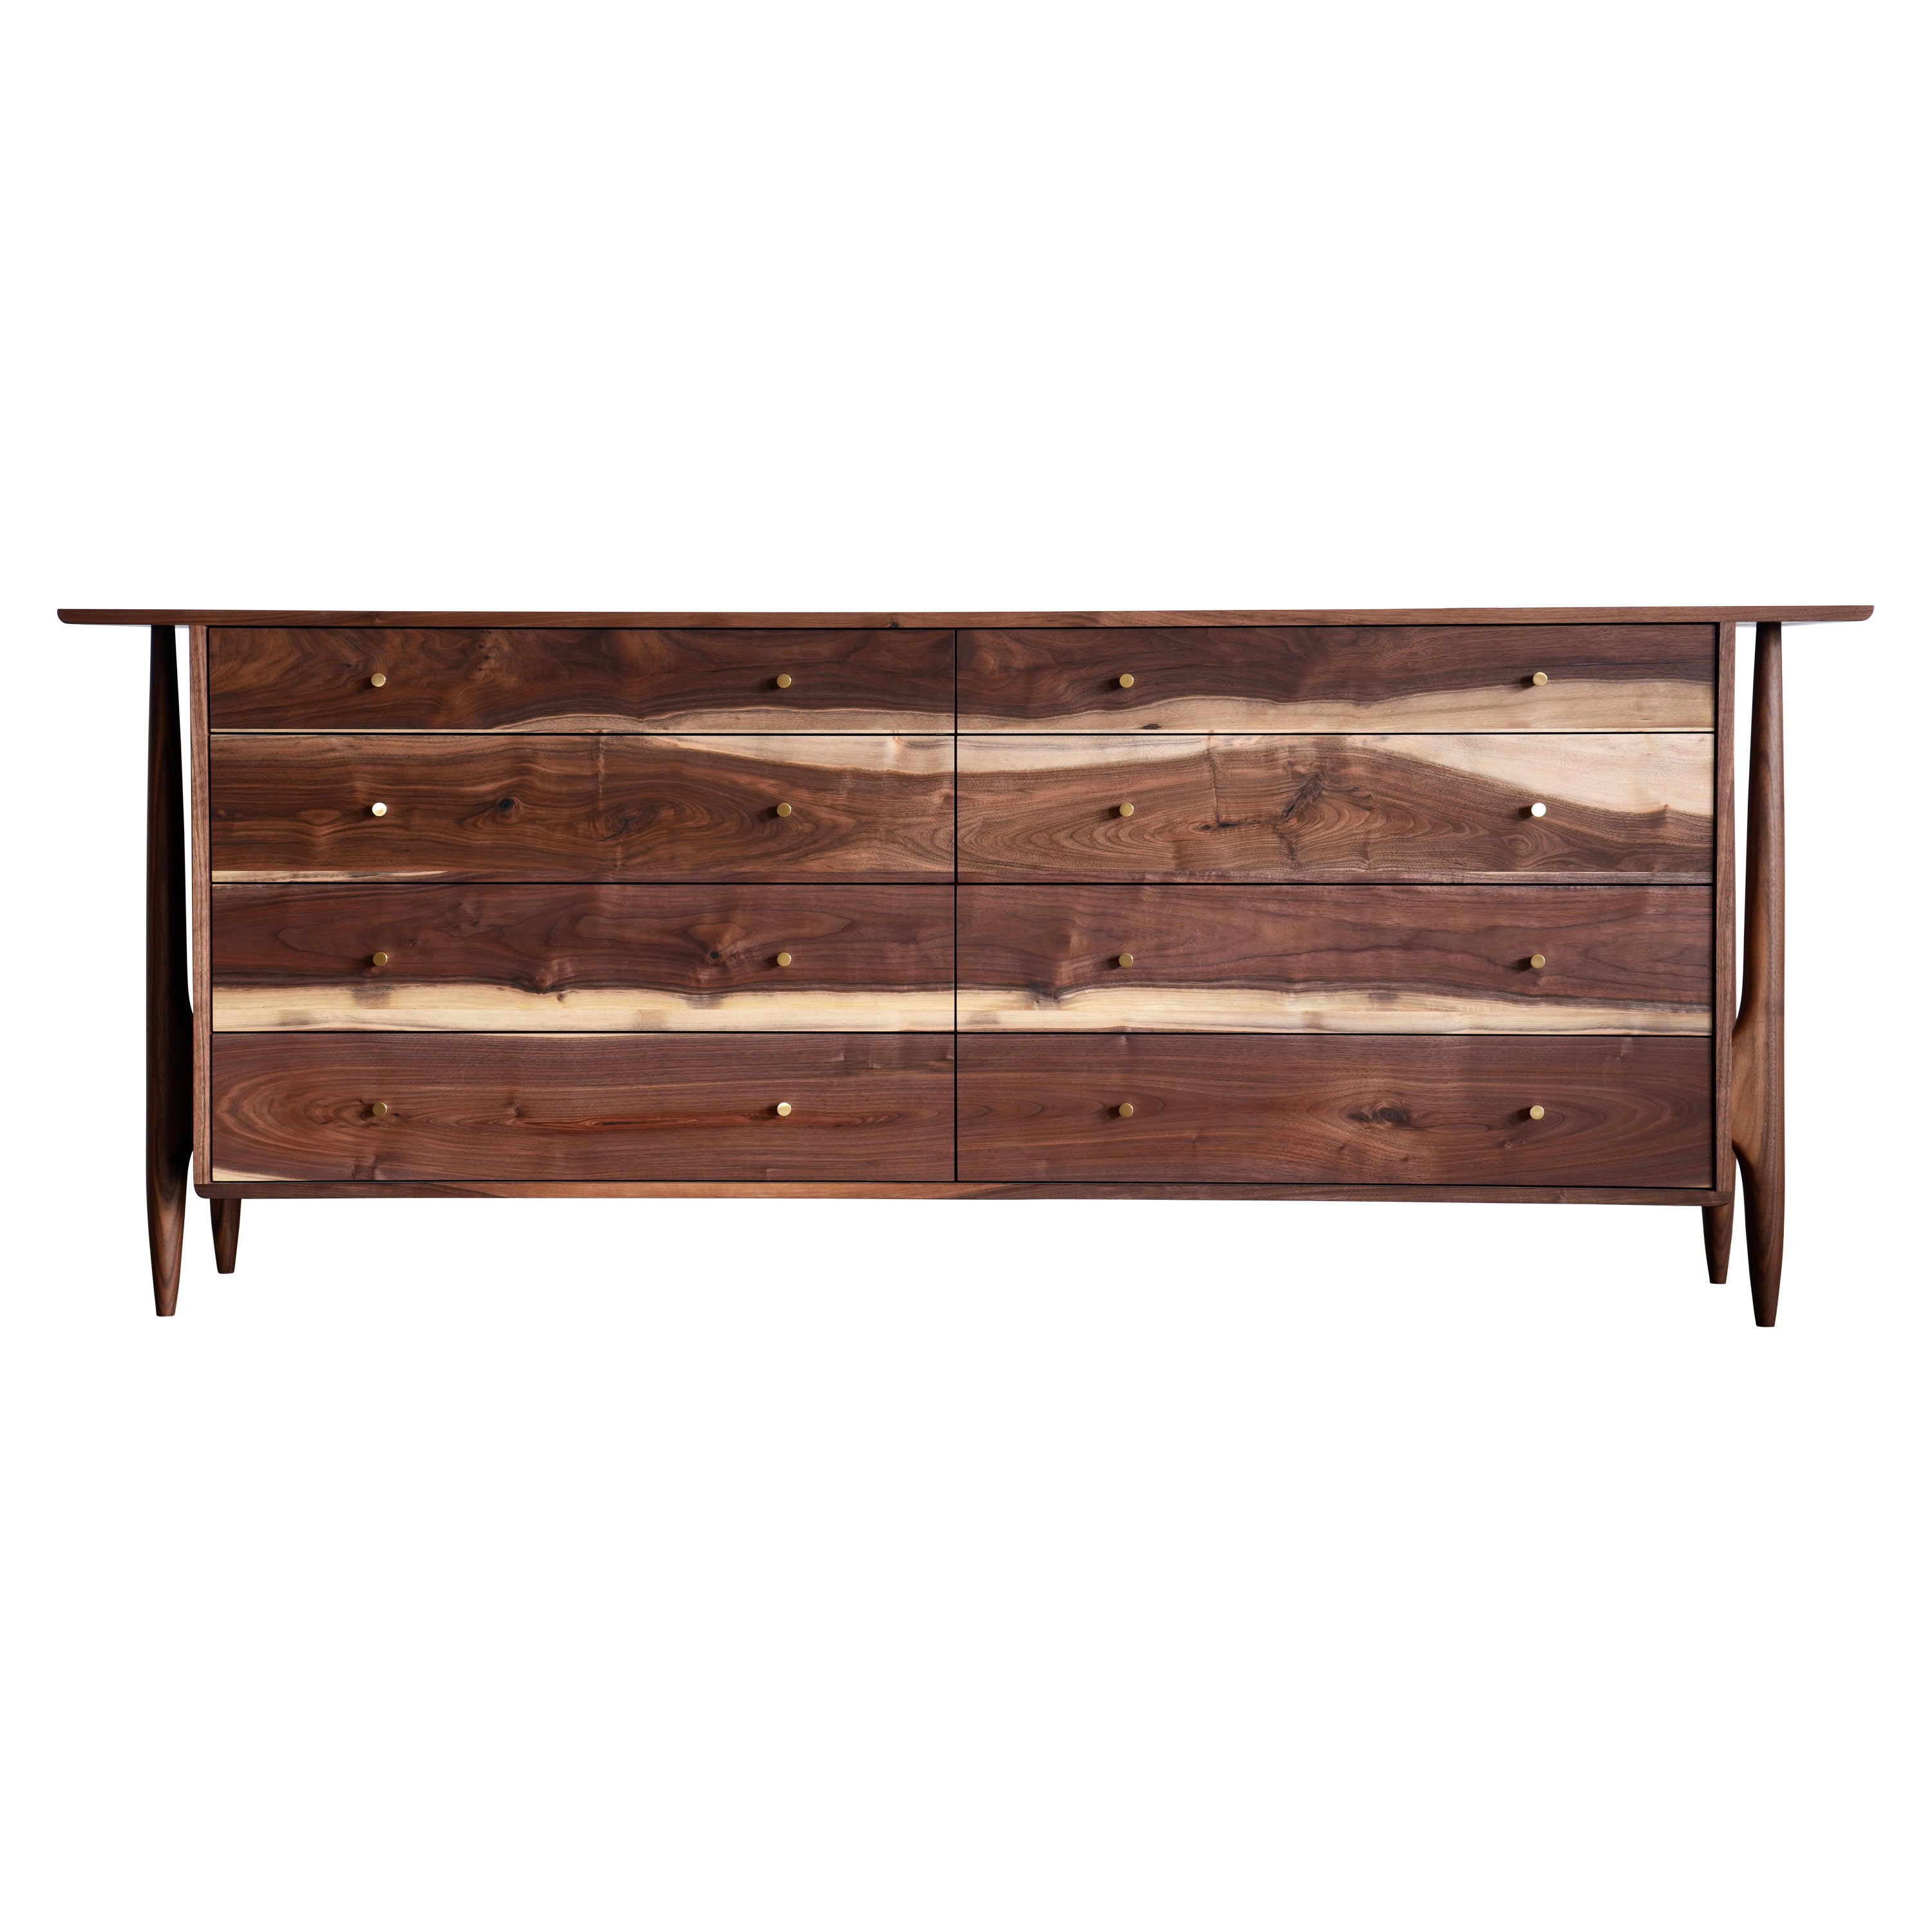 The Modernity Modern Dresser Solid Wood Push to Open Drawers (commode en bois massif à ouverture par pression)